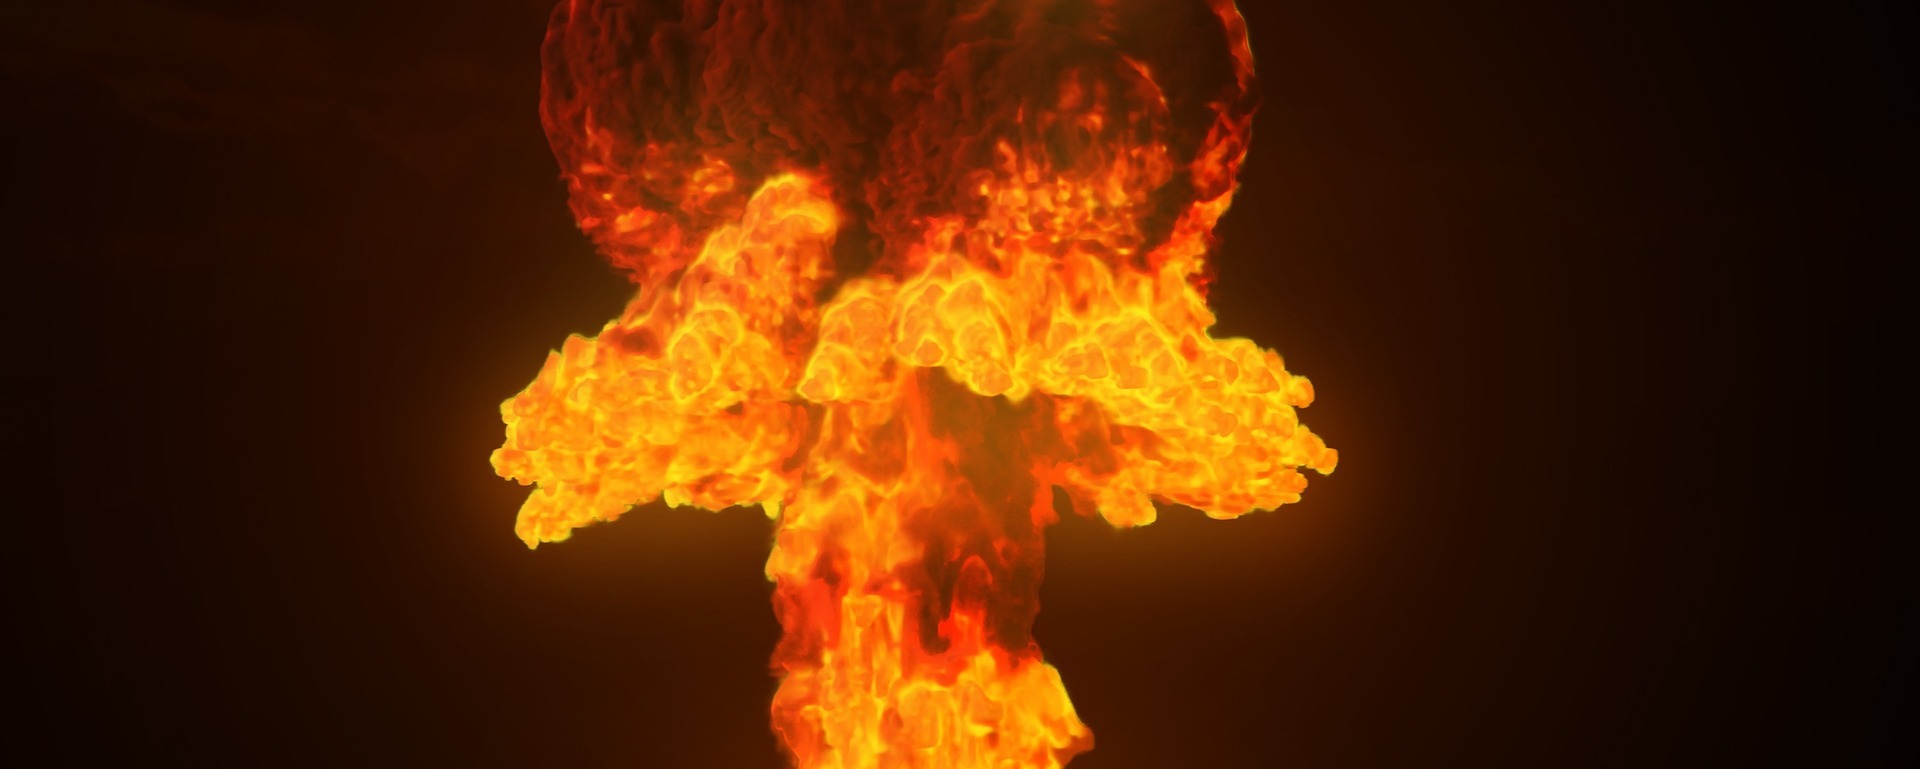 bomb mushroom cloud on fire